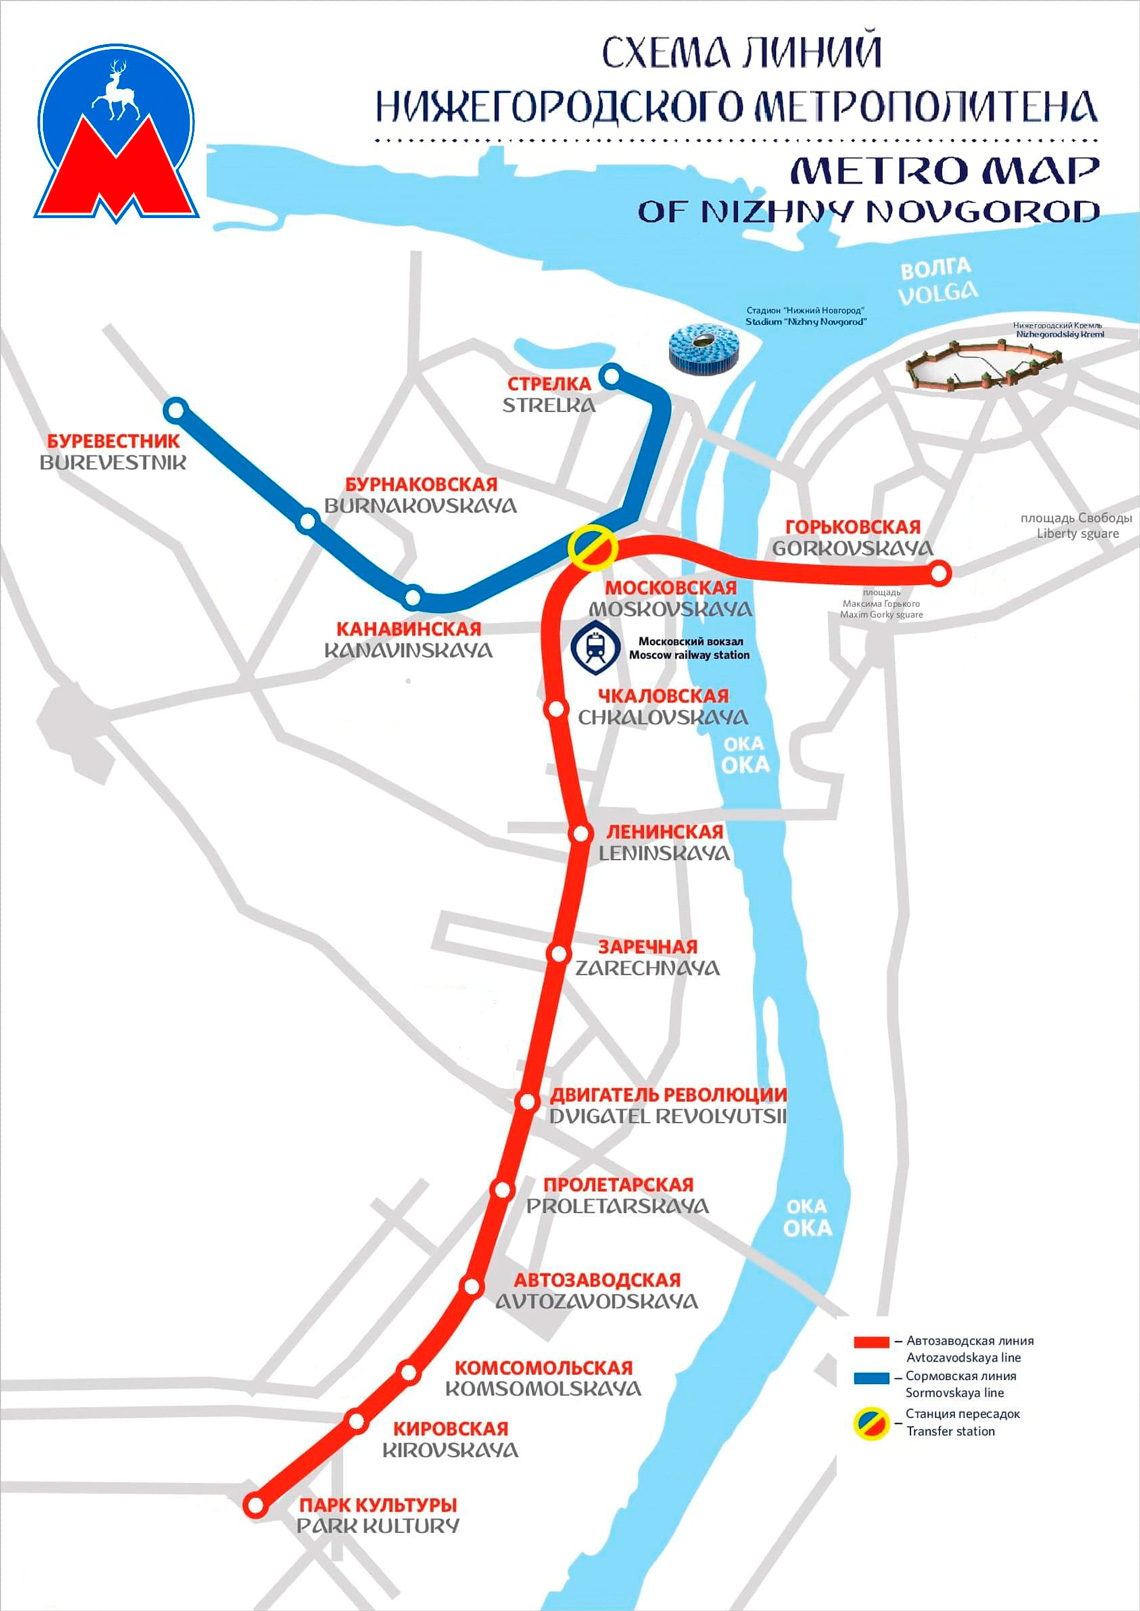 Схема метрополитена Нижнего Новгорода